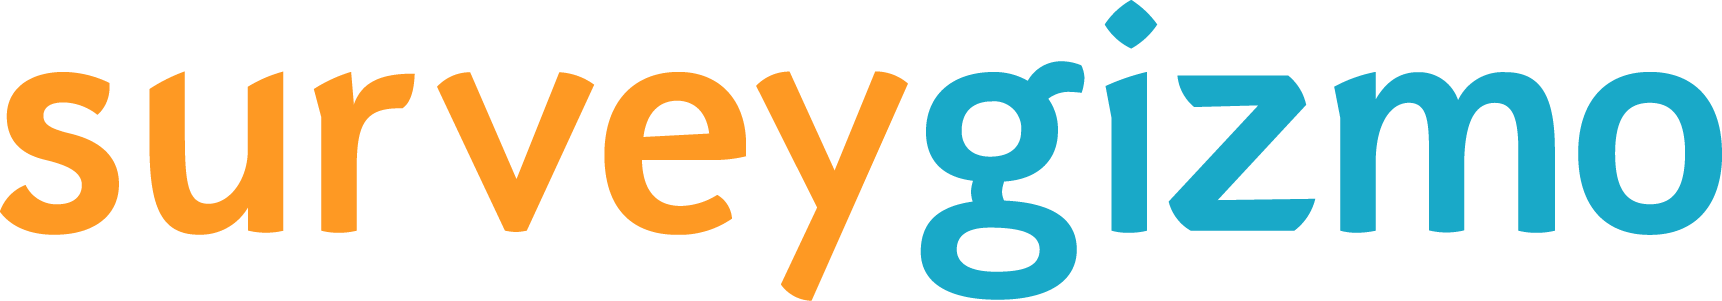 SurveyGizmo Logo png